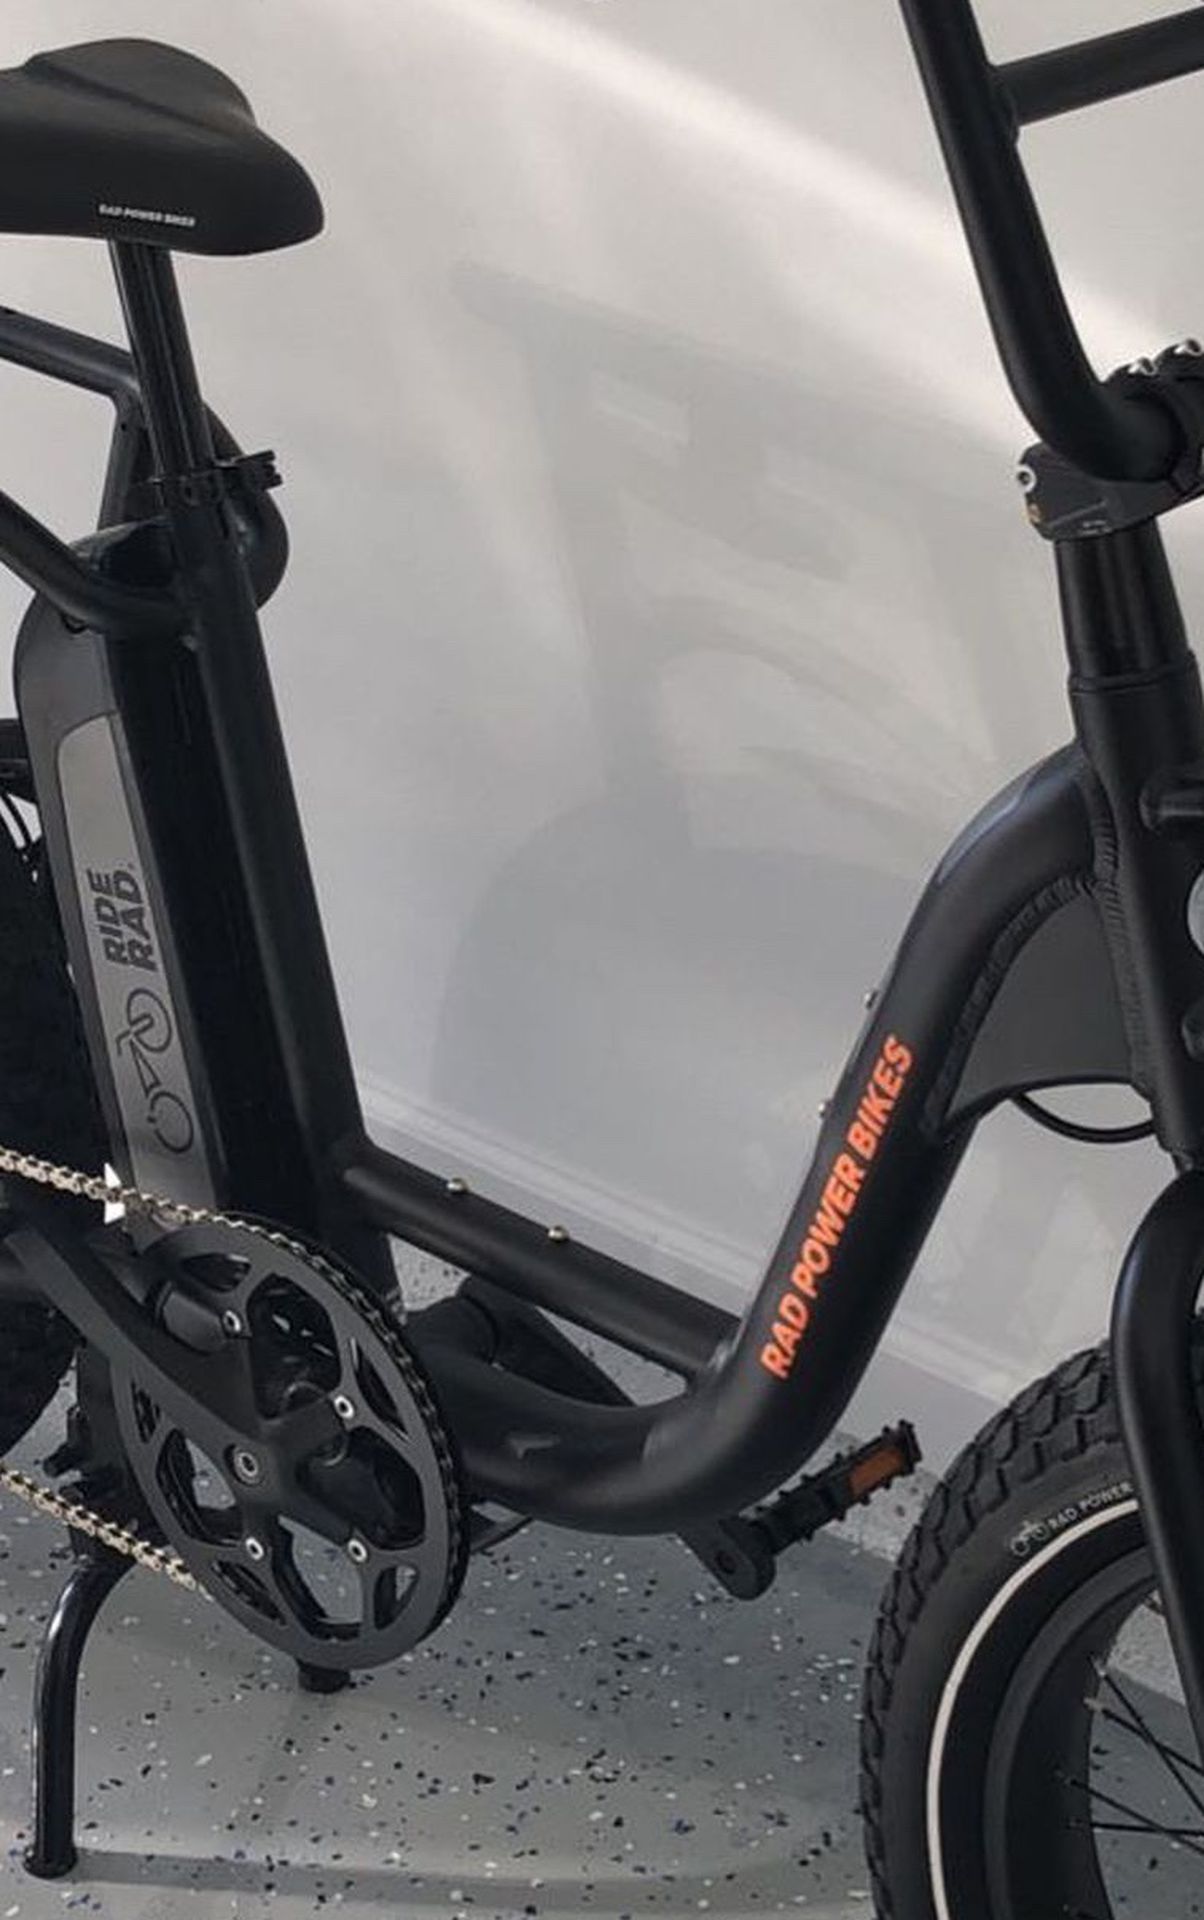 Brand New Rad Electric Bike-Worth $1500.0